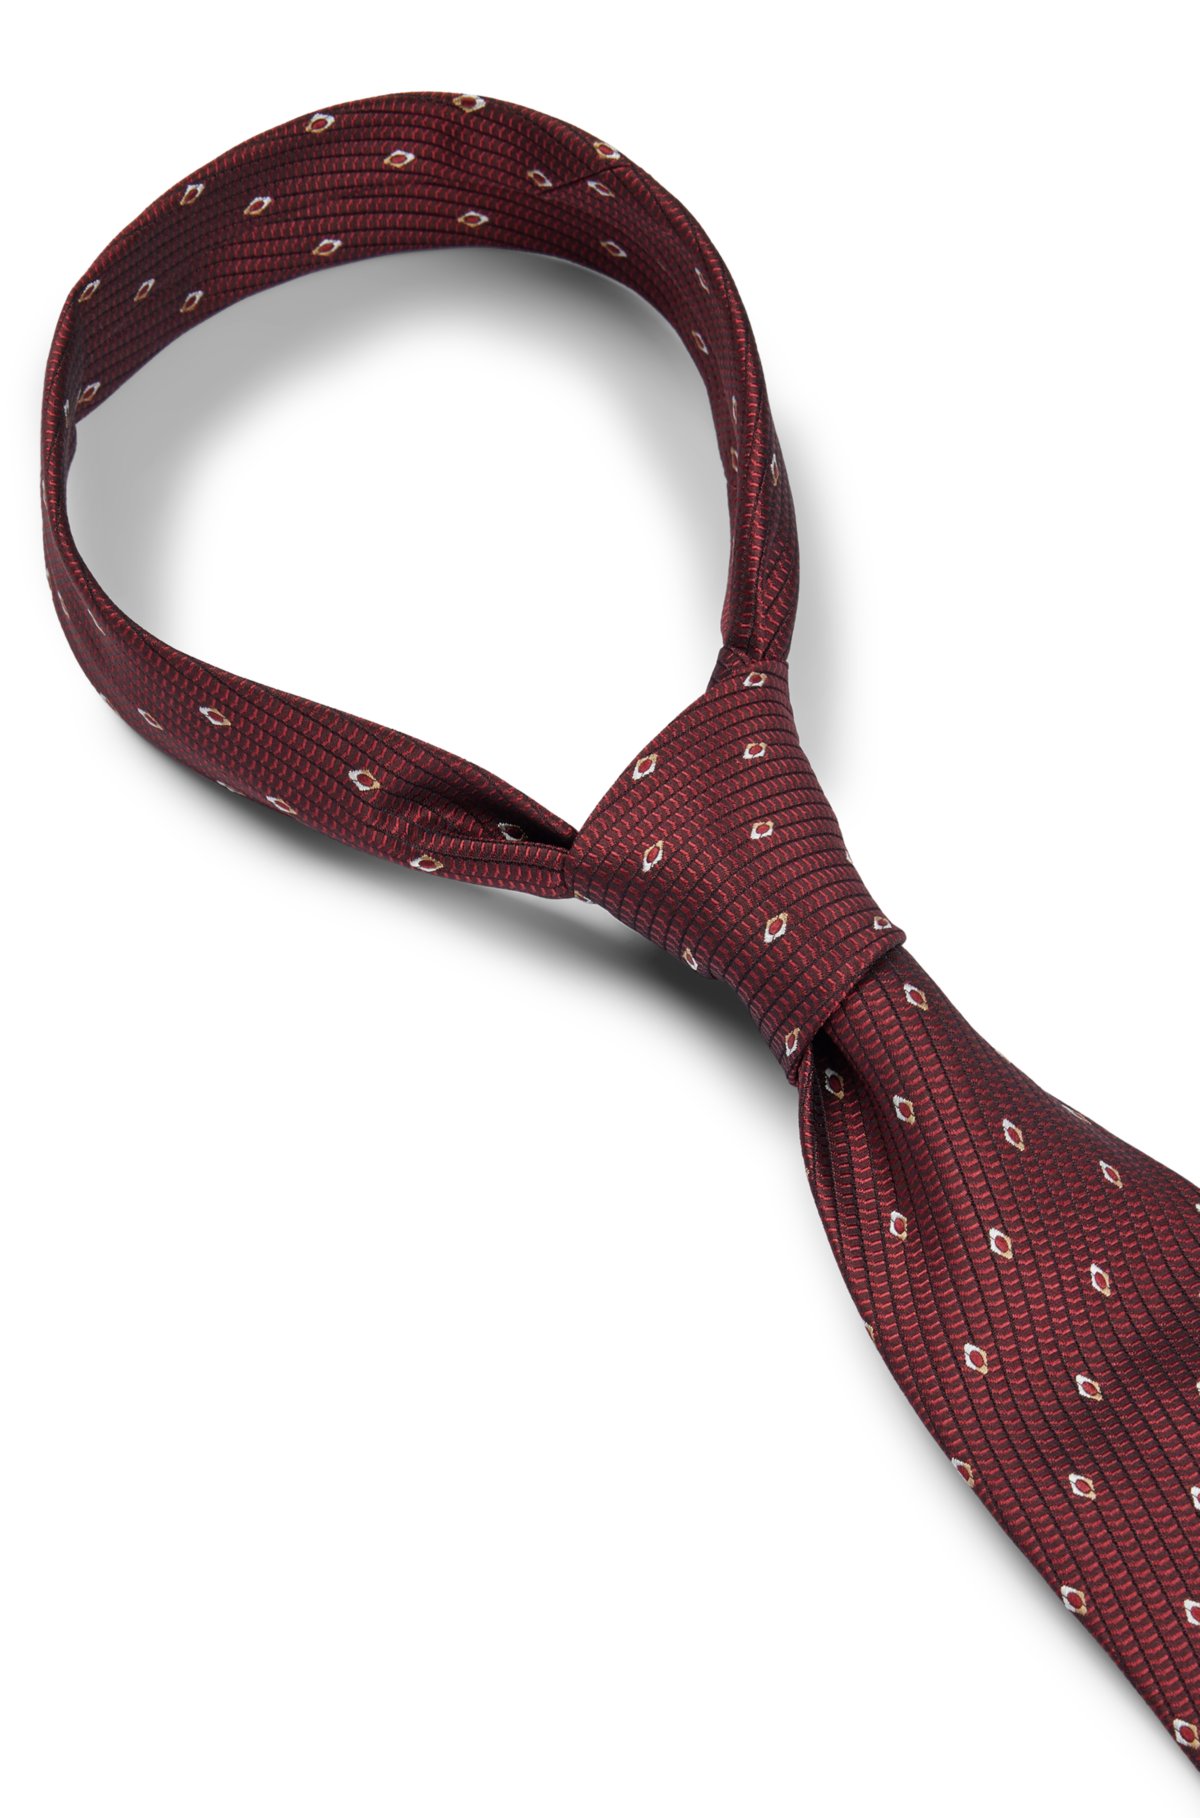 BOSS - Silk-jacquard tie with modern pattern